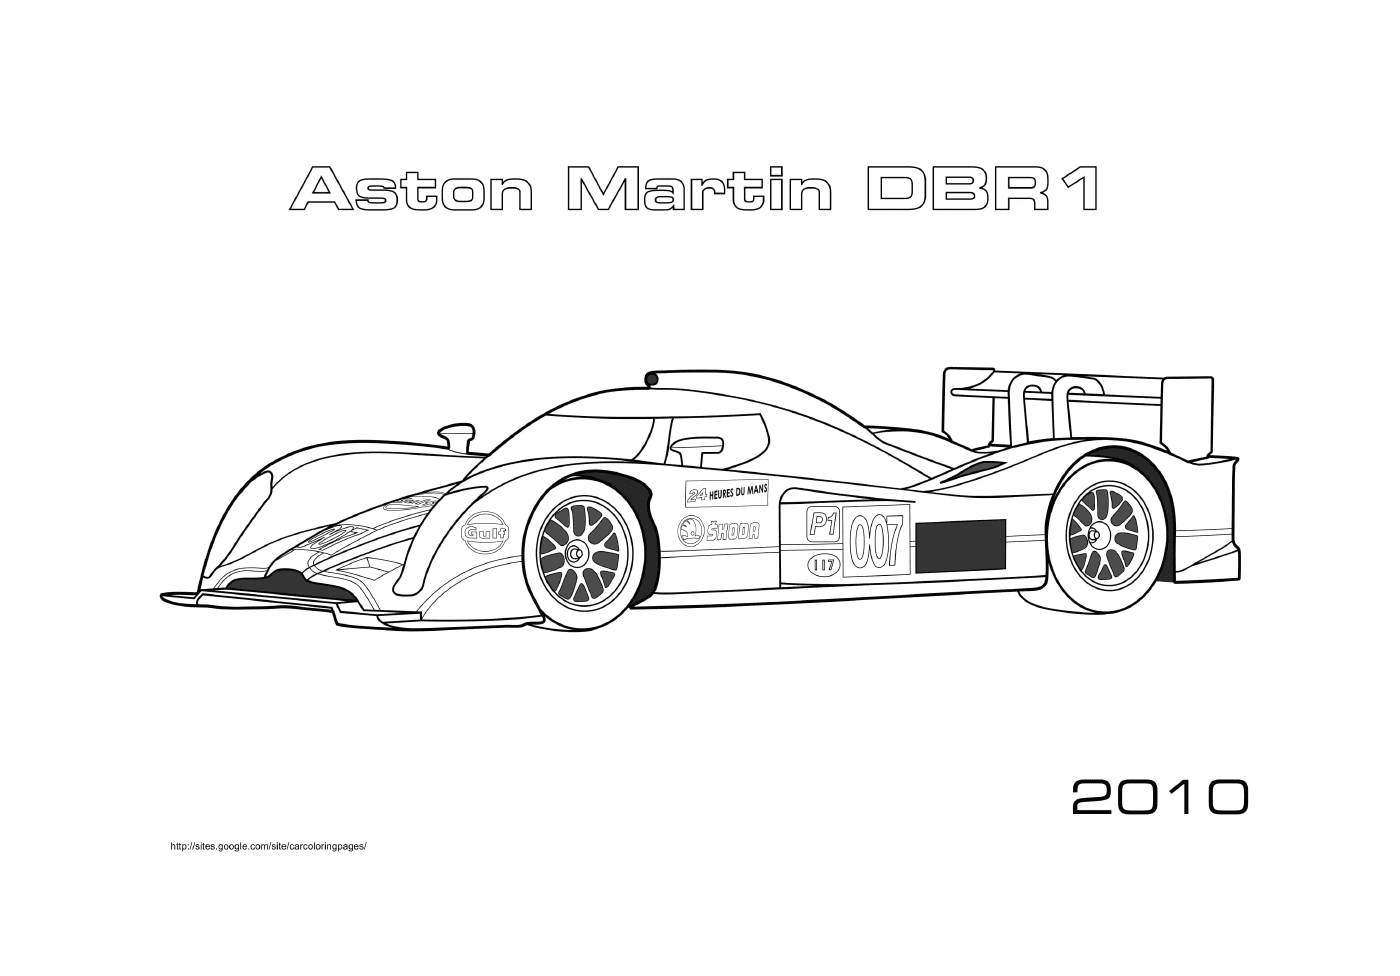   Aston Martin Dbr1 2010 